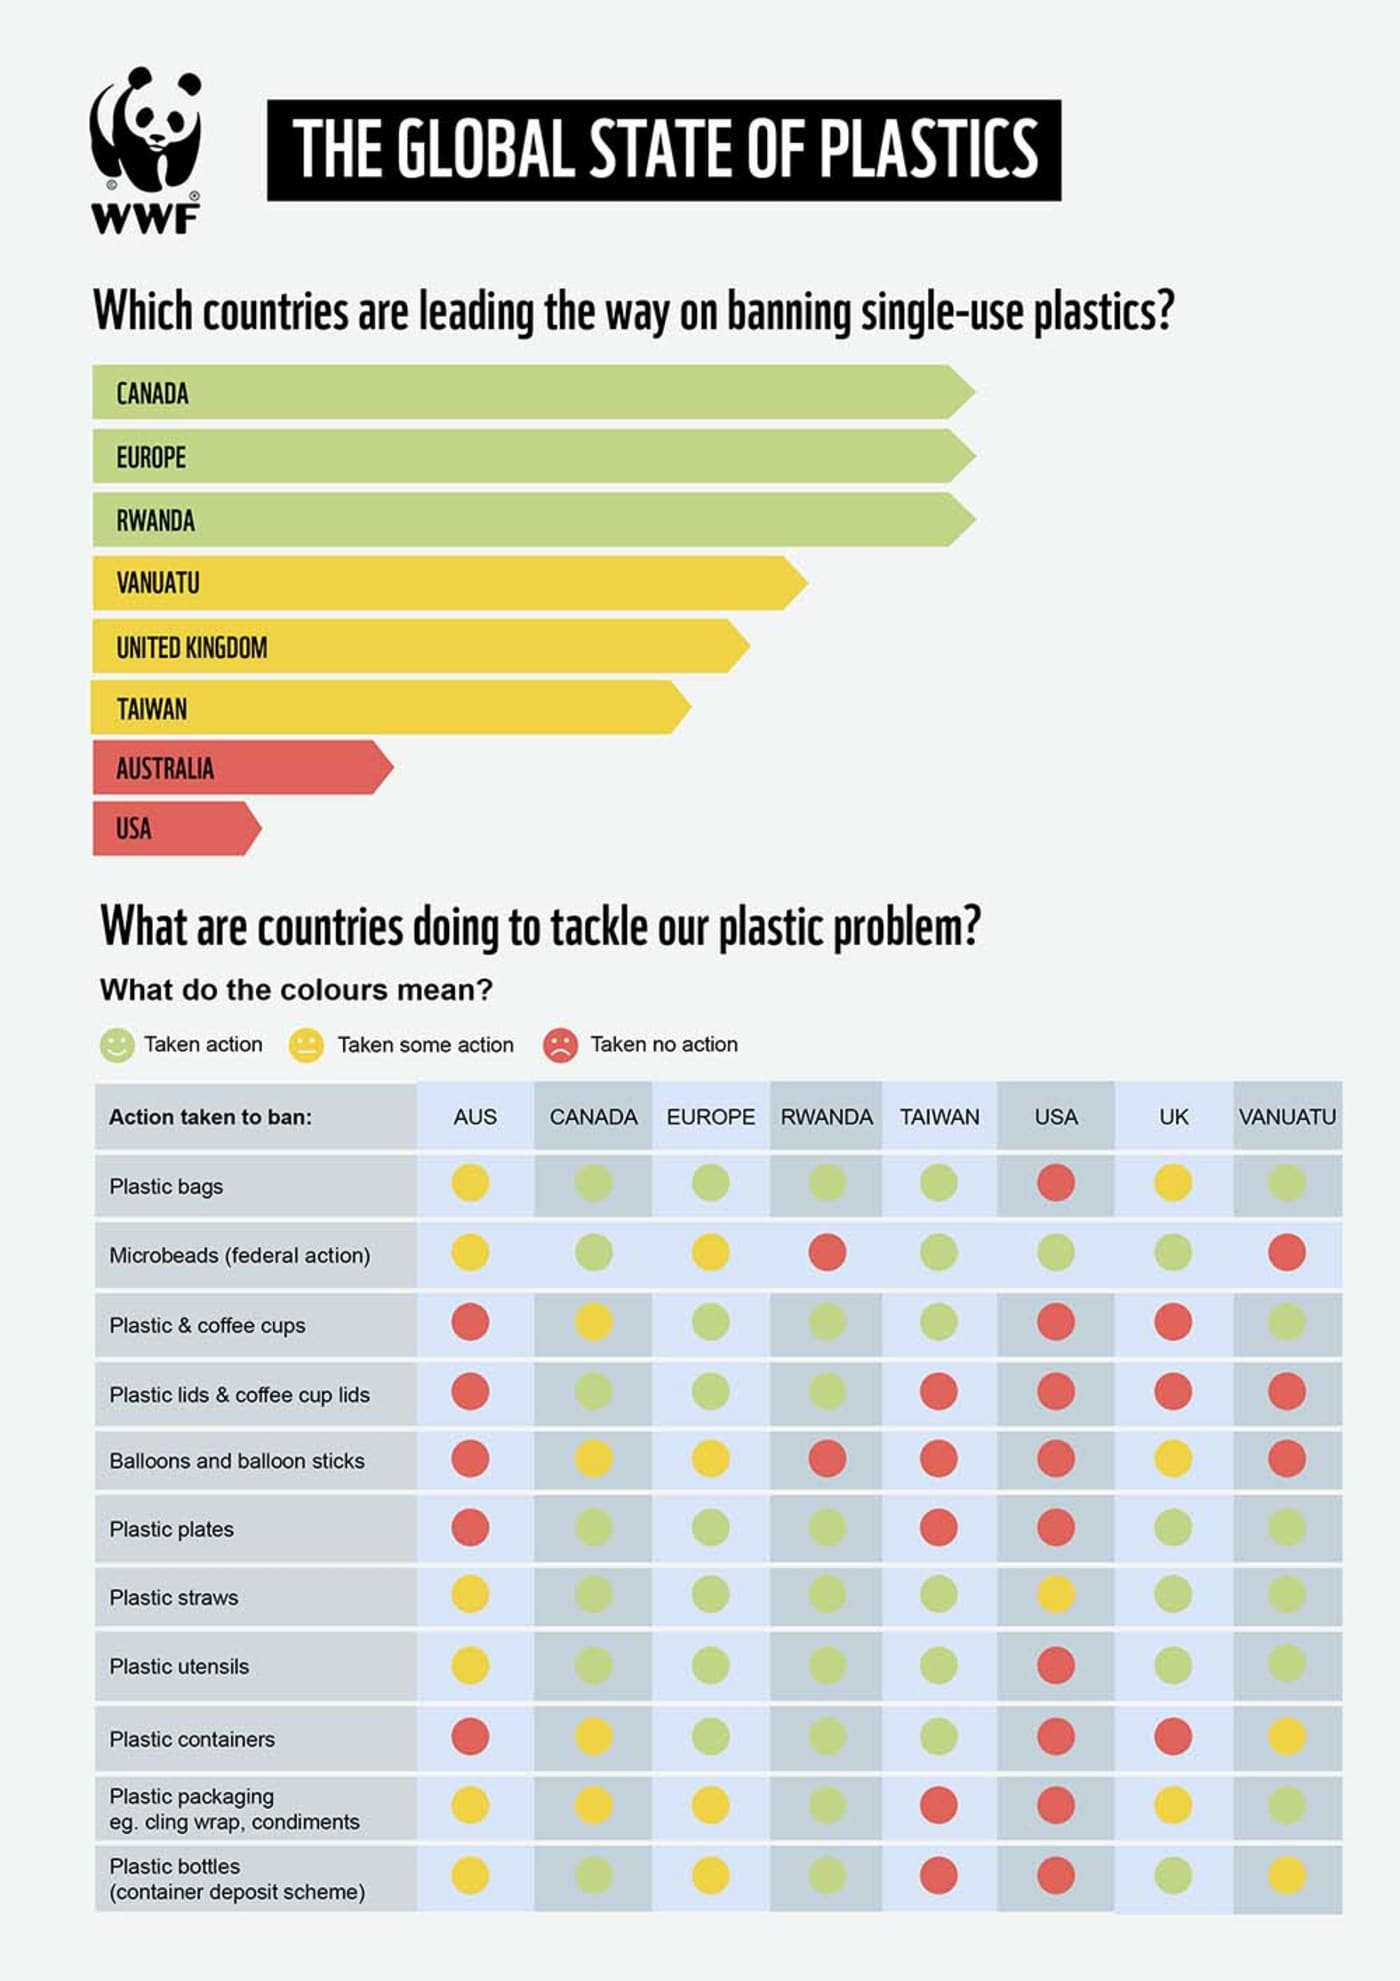 The global state of plastics scorecard